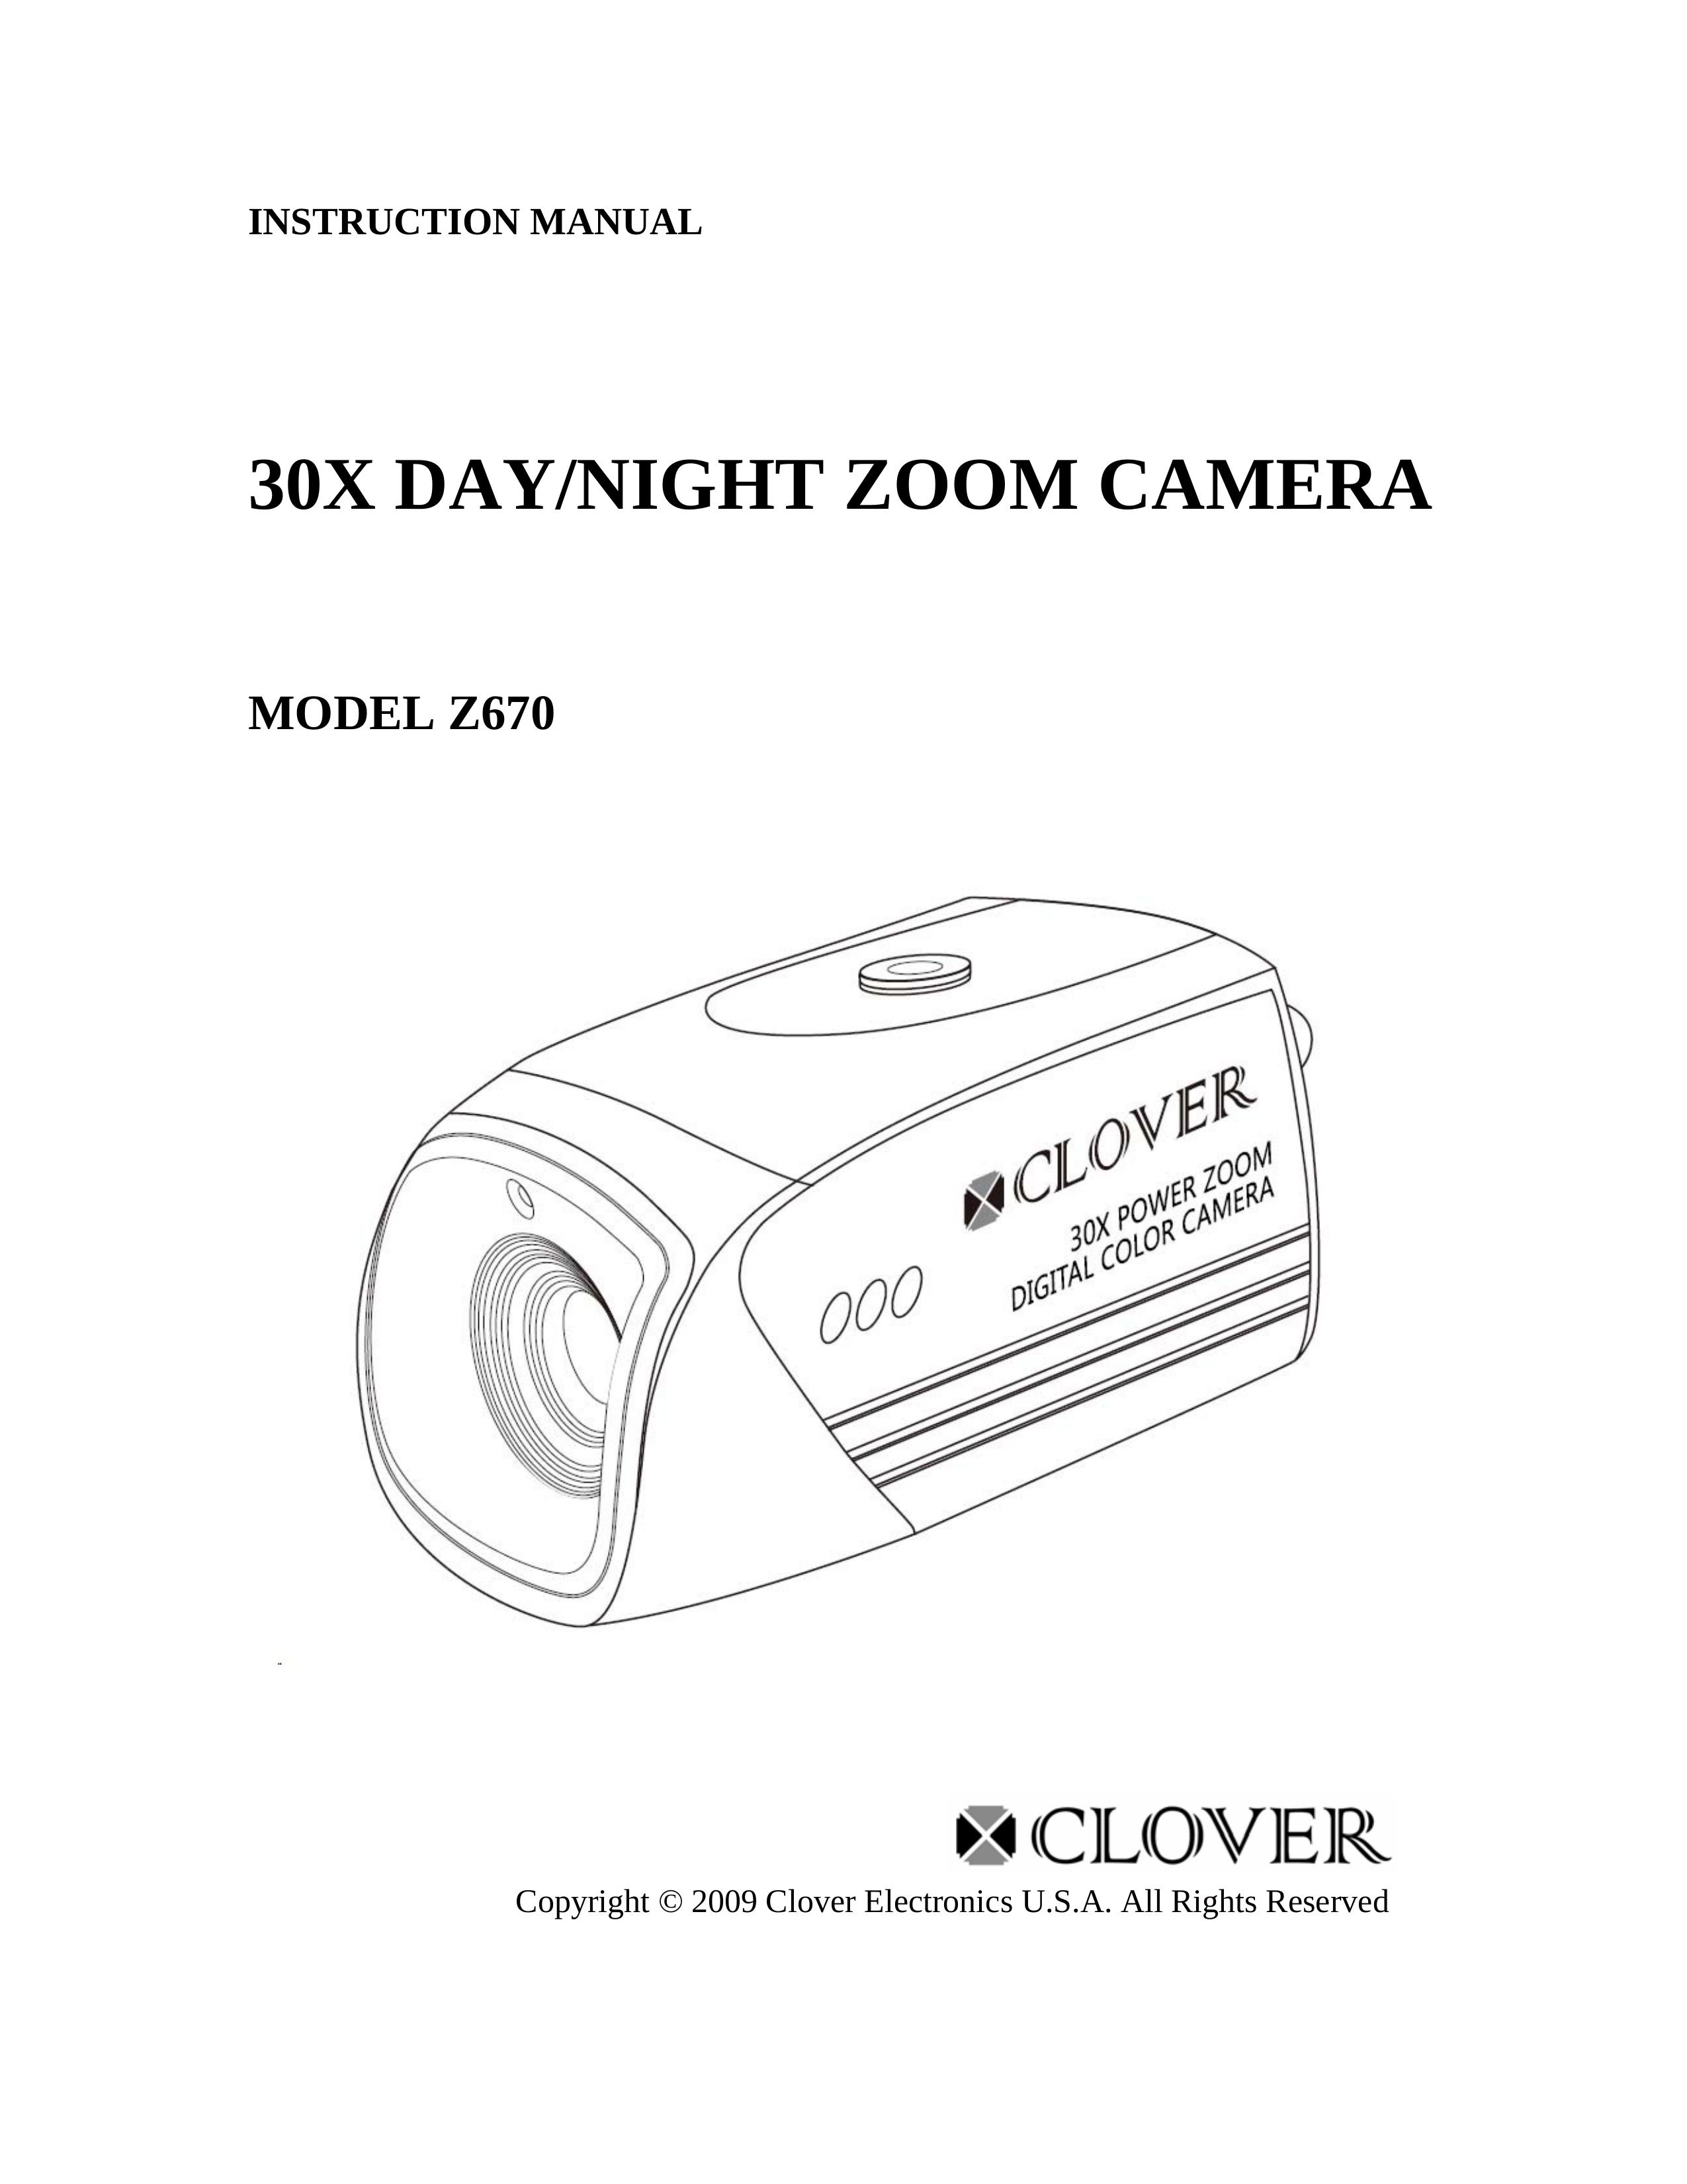 Clover Electronics Z670 Digital Camera User Manual